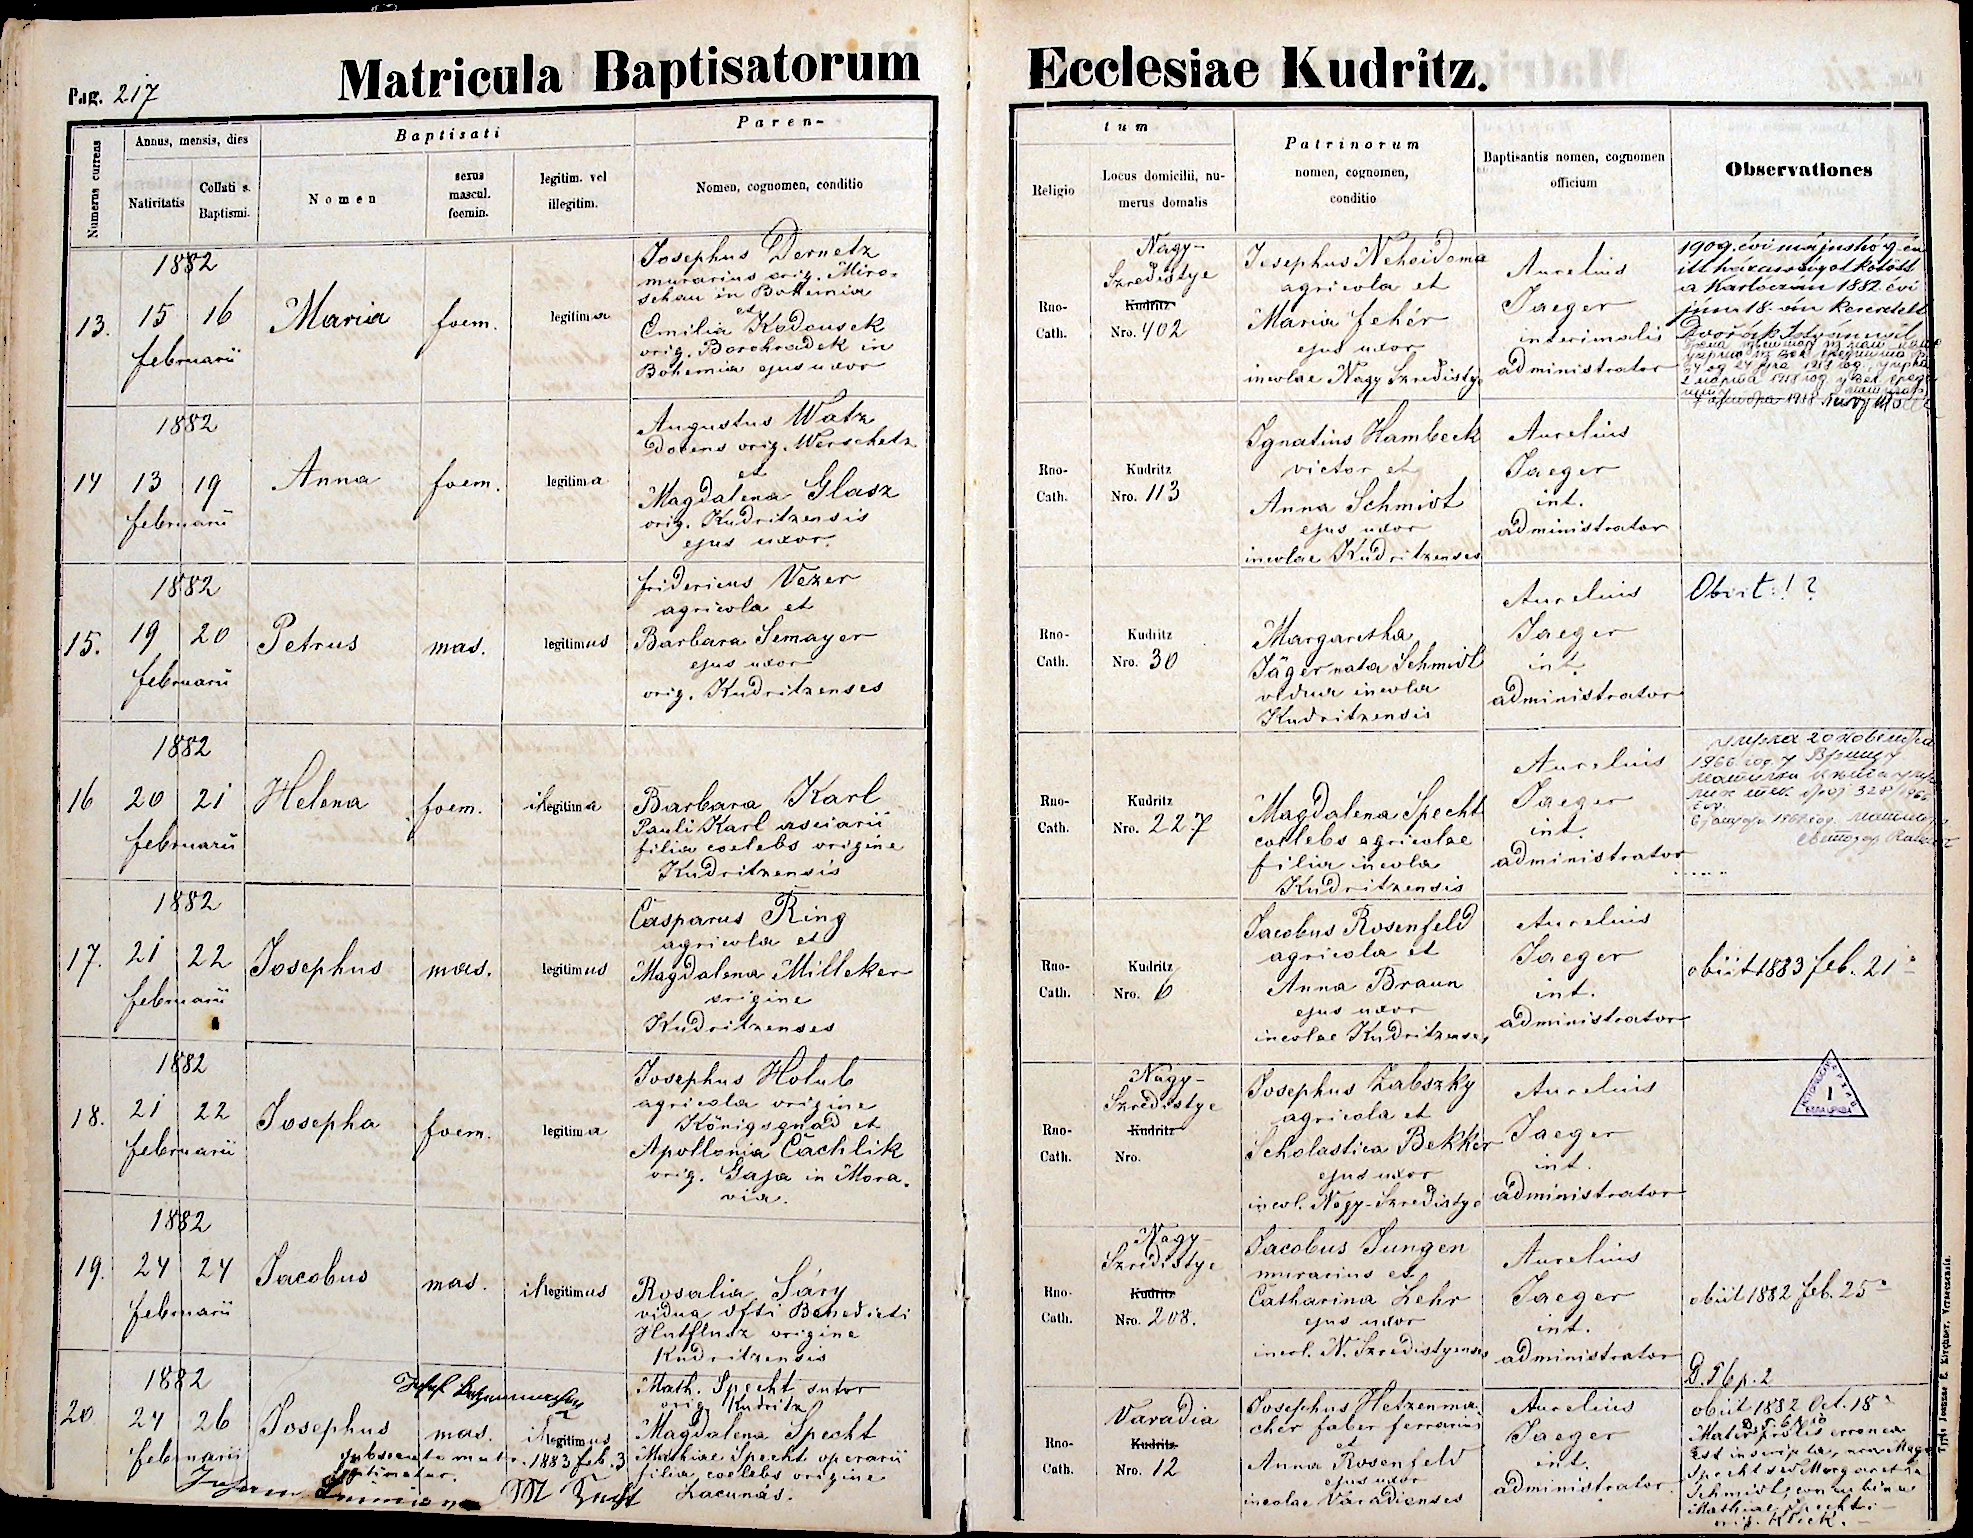 images/church_records/BIRTHS/1884-1899B/1899/217